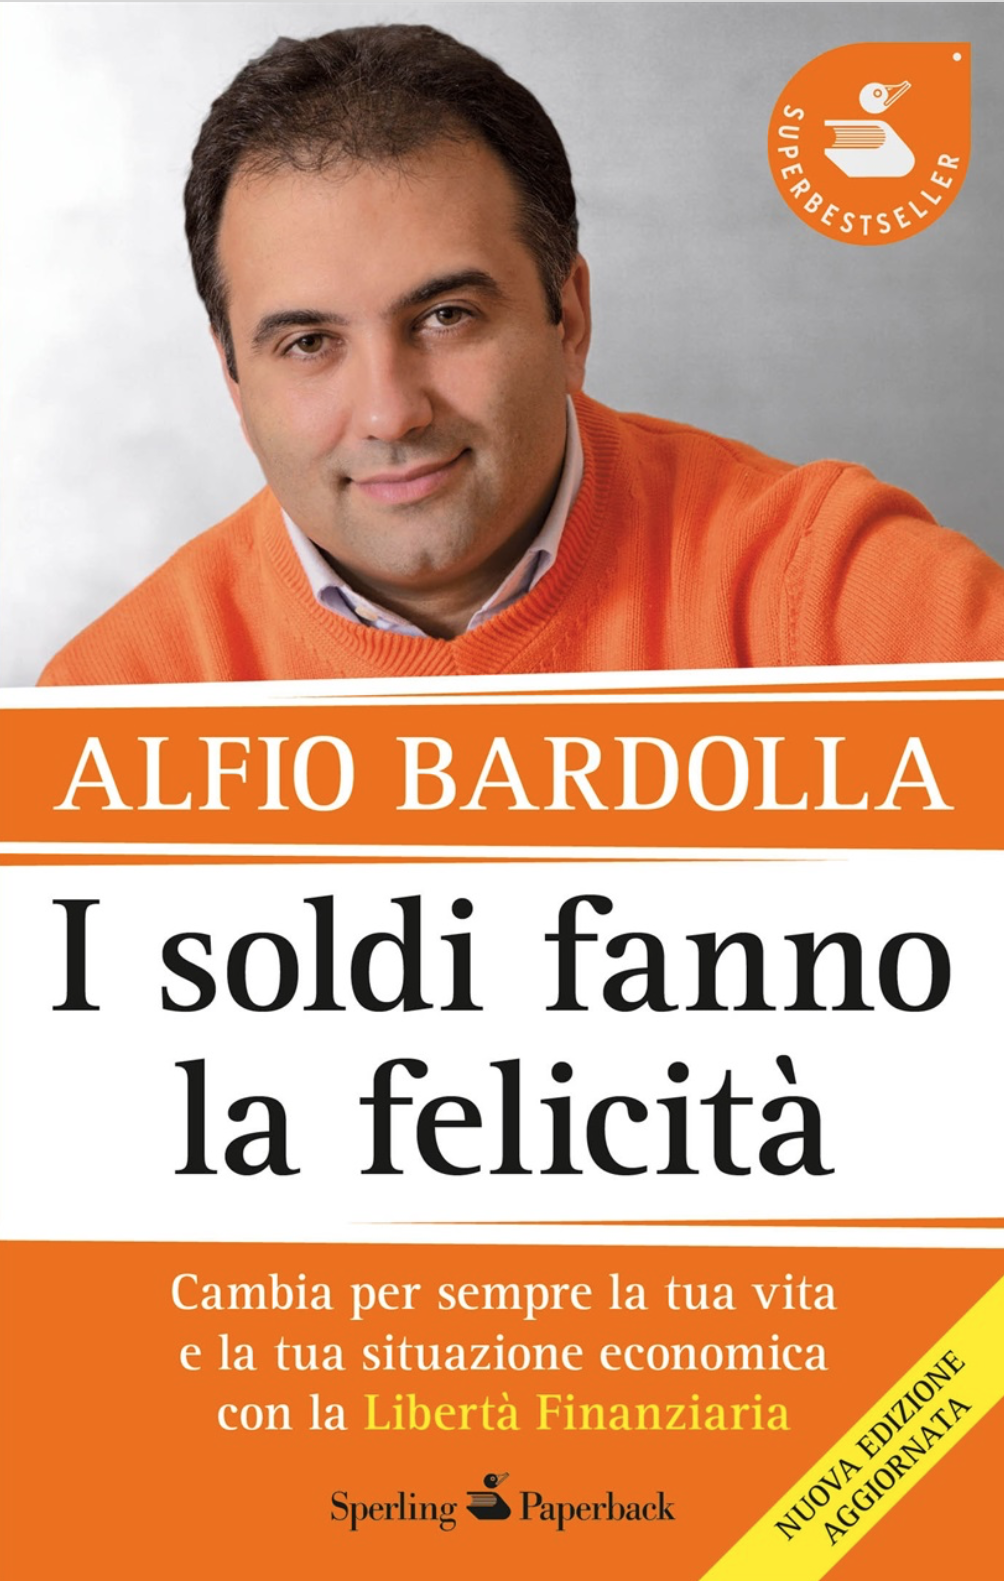 Alfio Bardolla 